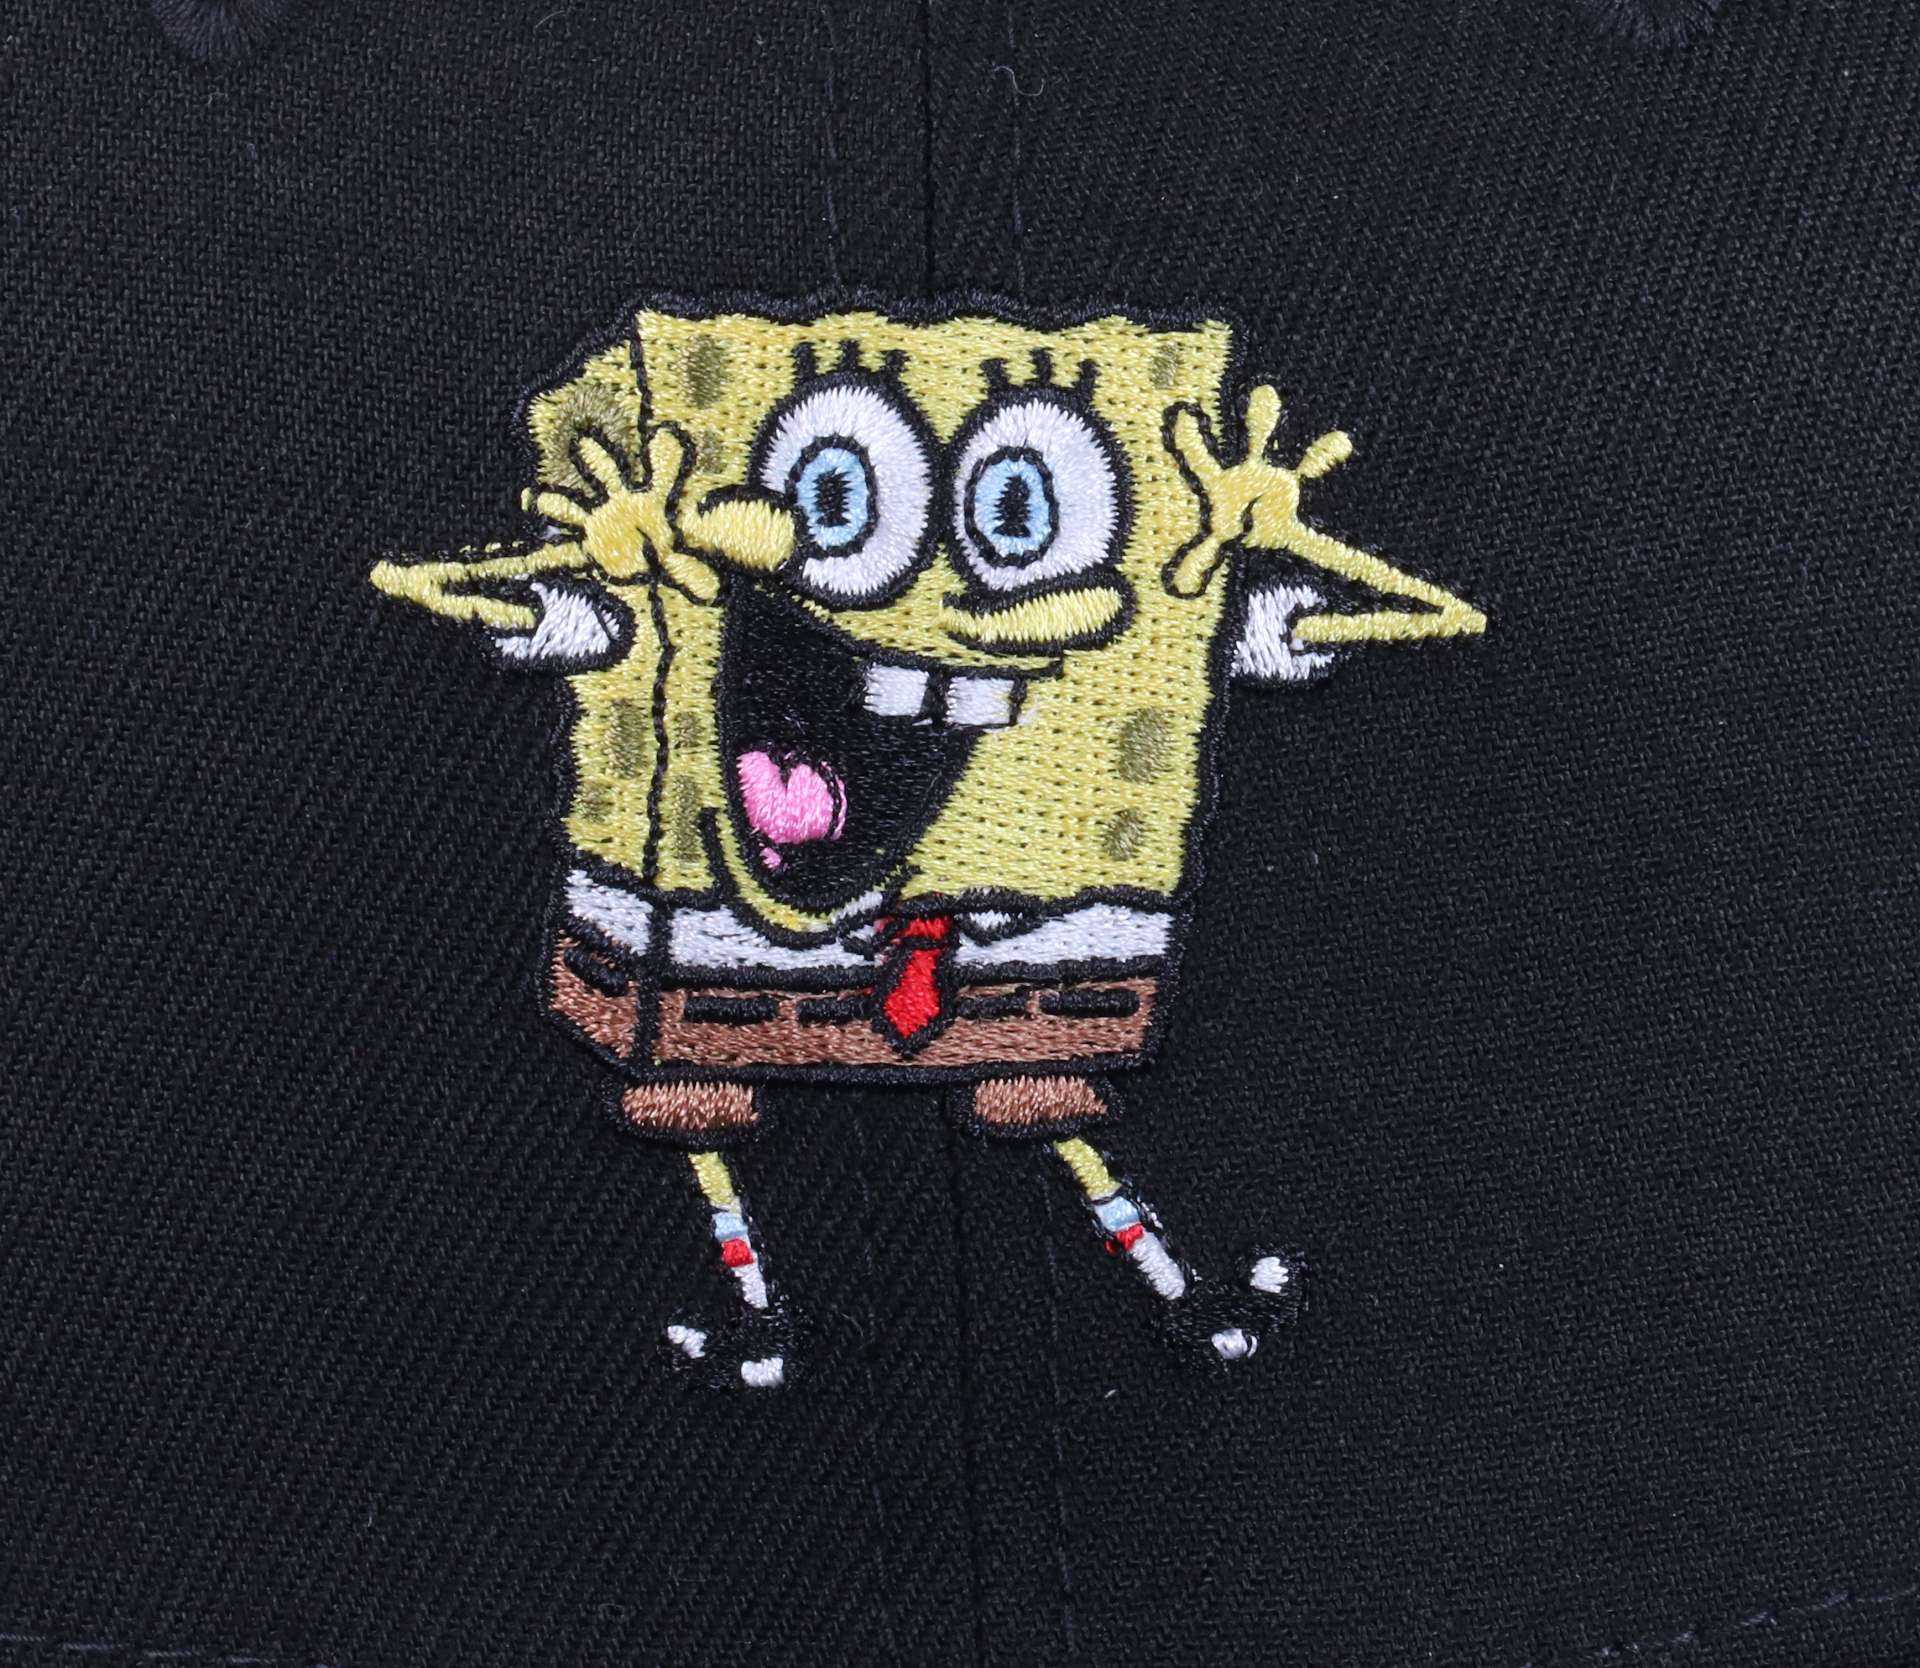 Spongebob Squarepants Spongebob Smile Black 9Fifty Snapback Cap New Era